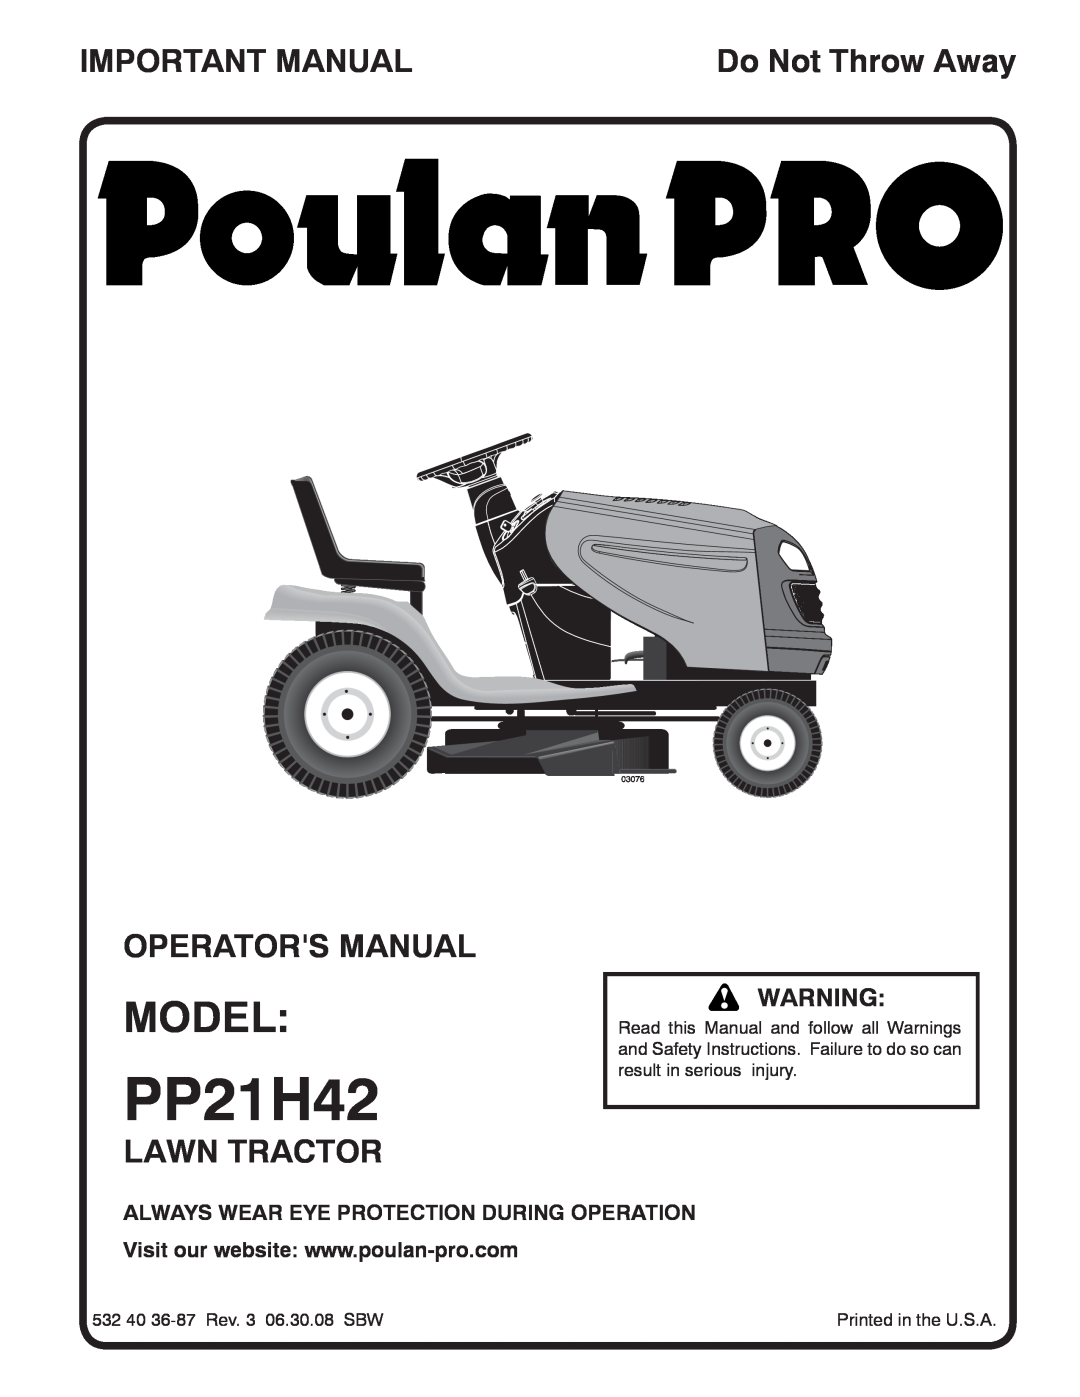 Poulan 532 40 36-87 manual Model, Important Manual, Operators Manual, Lawn Tractor, PP21H42, Do Not Throw Away, 03076 